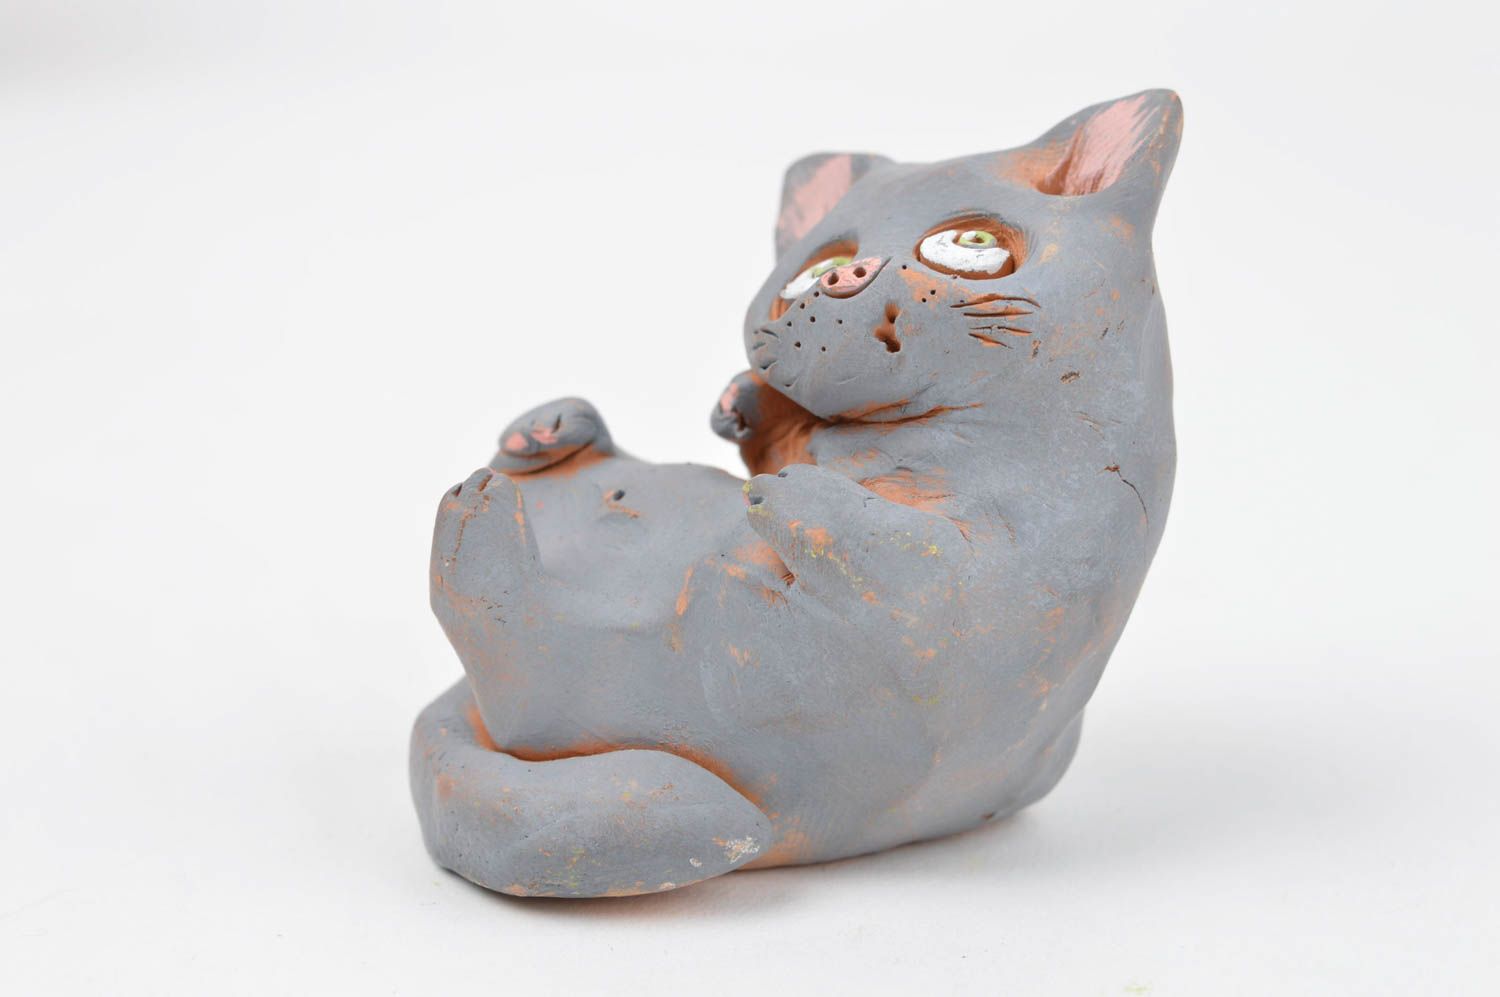 Handmade ceramic statuette unusual animal figurine cute home decor ideas photo 2